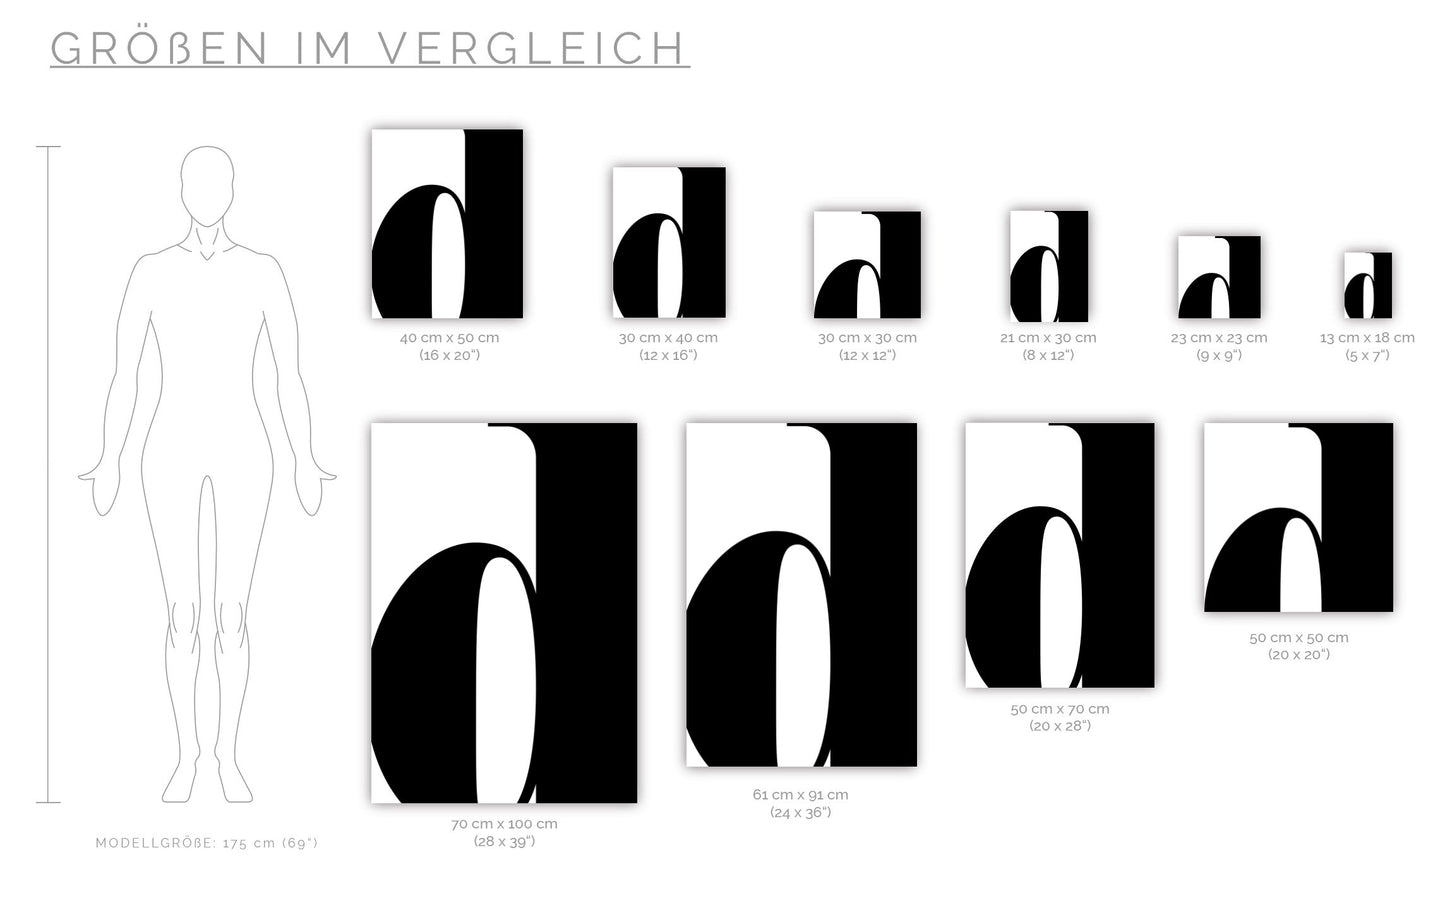 Poster Buchstabe D - Serif